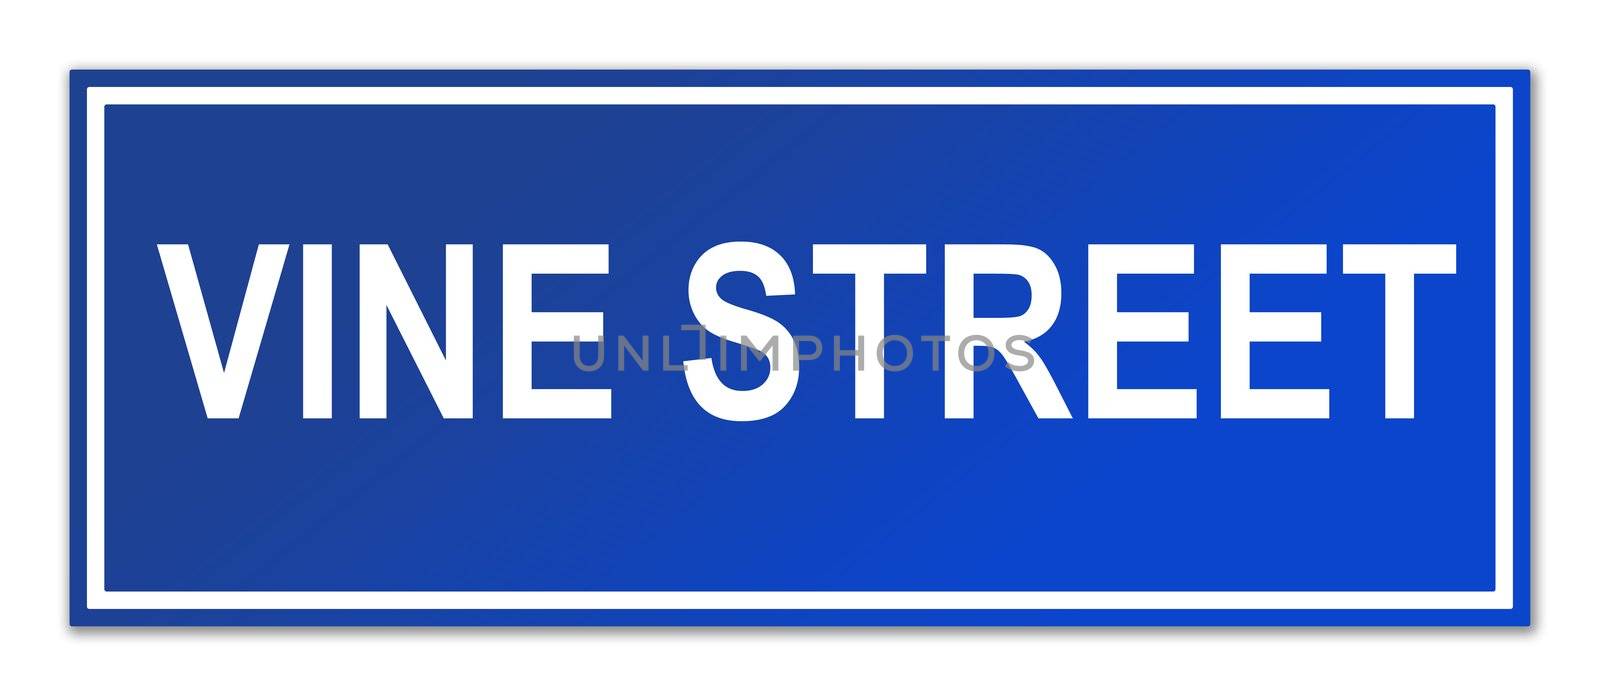 Vine Street street sign by speedfighter